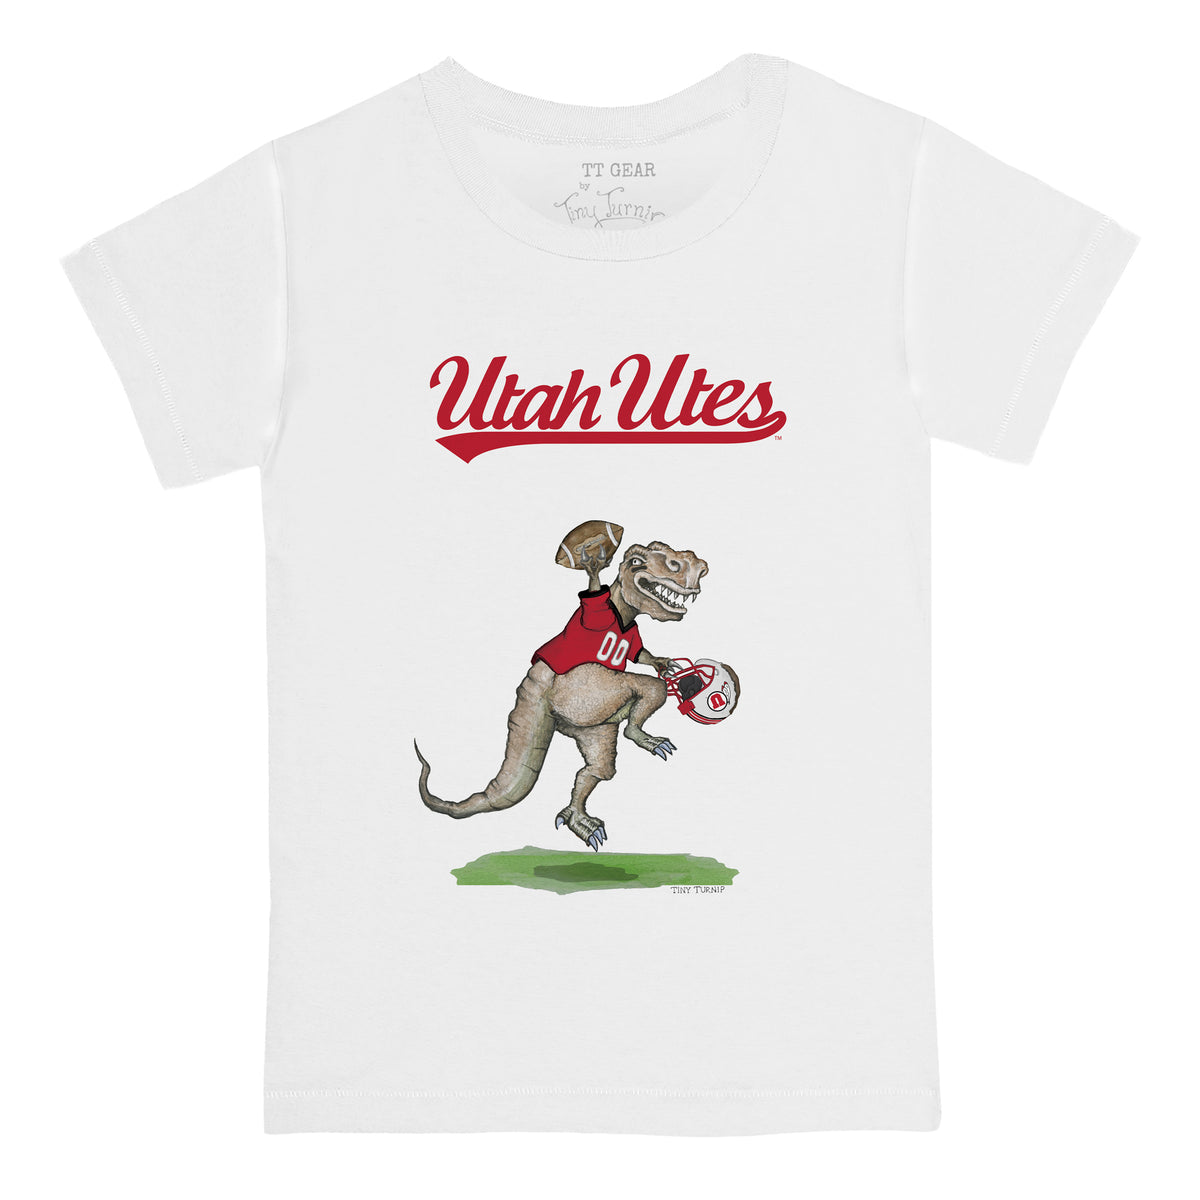 Utah Utes TT Rex Tee Shirt